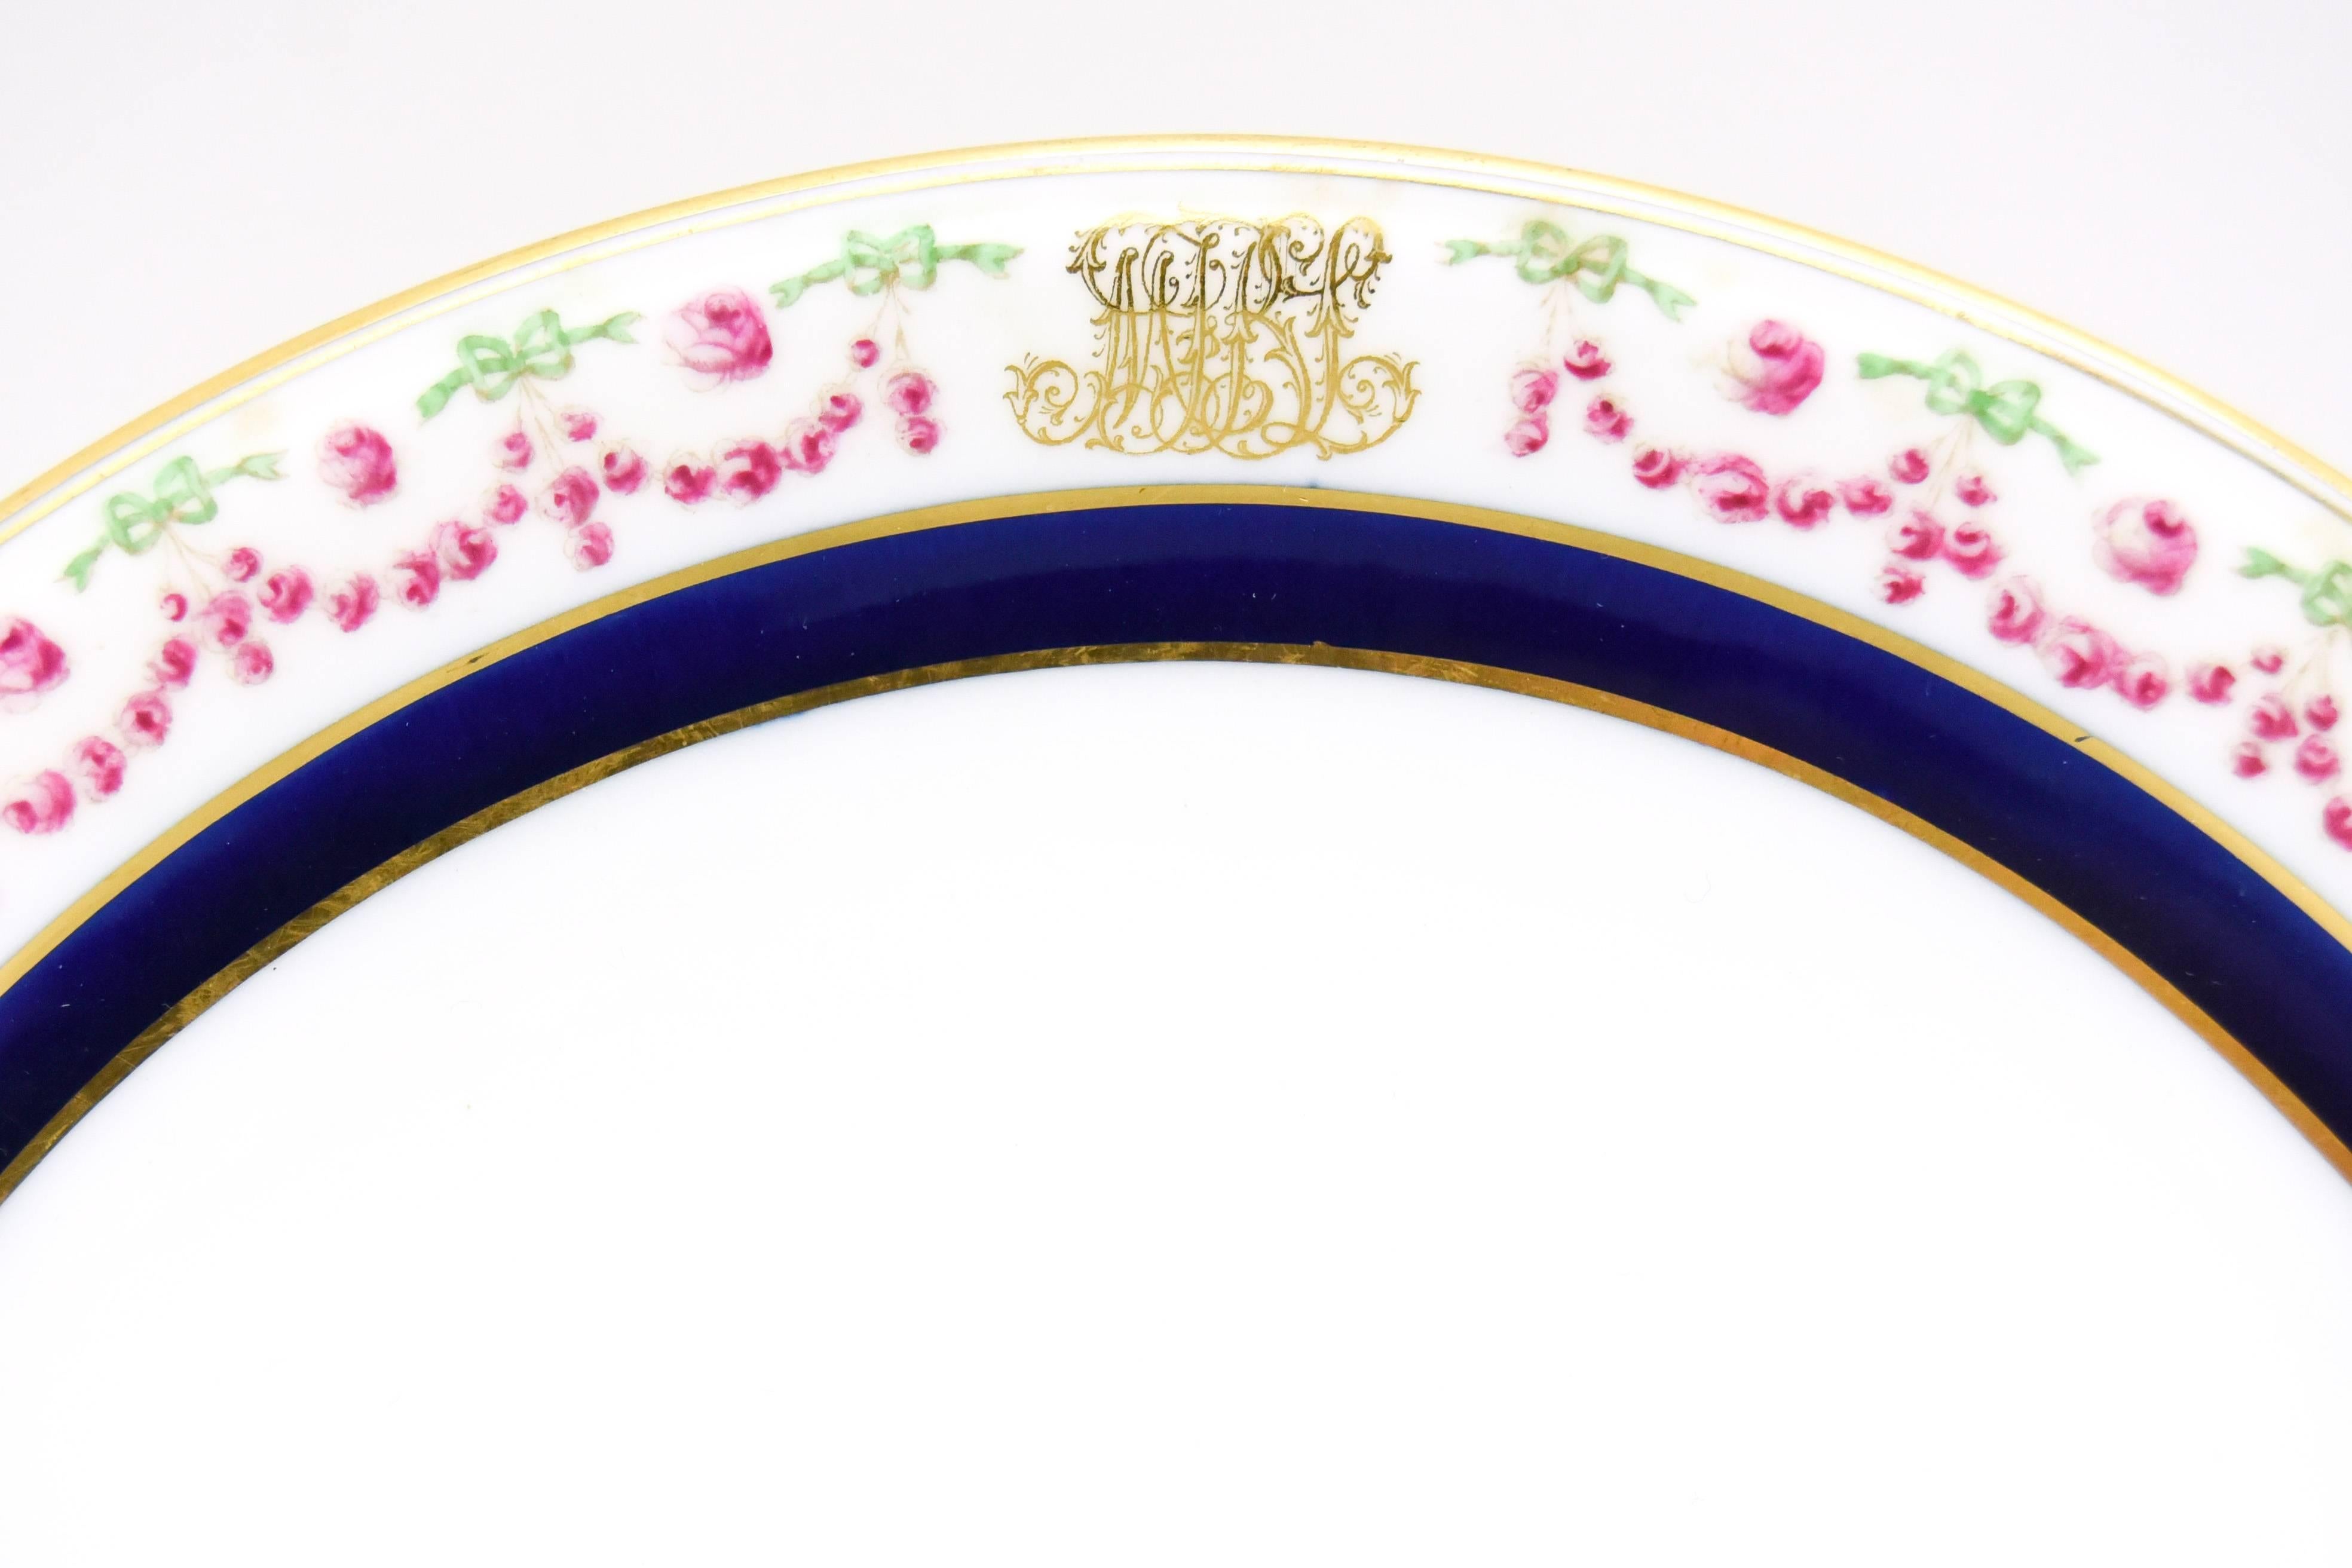 Early 20th Century Set of 12 Cauldon Porcelain Crescent Plates with Polychrome Enamel Decoration